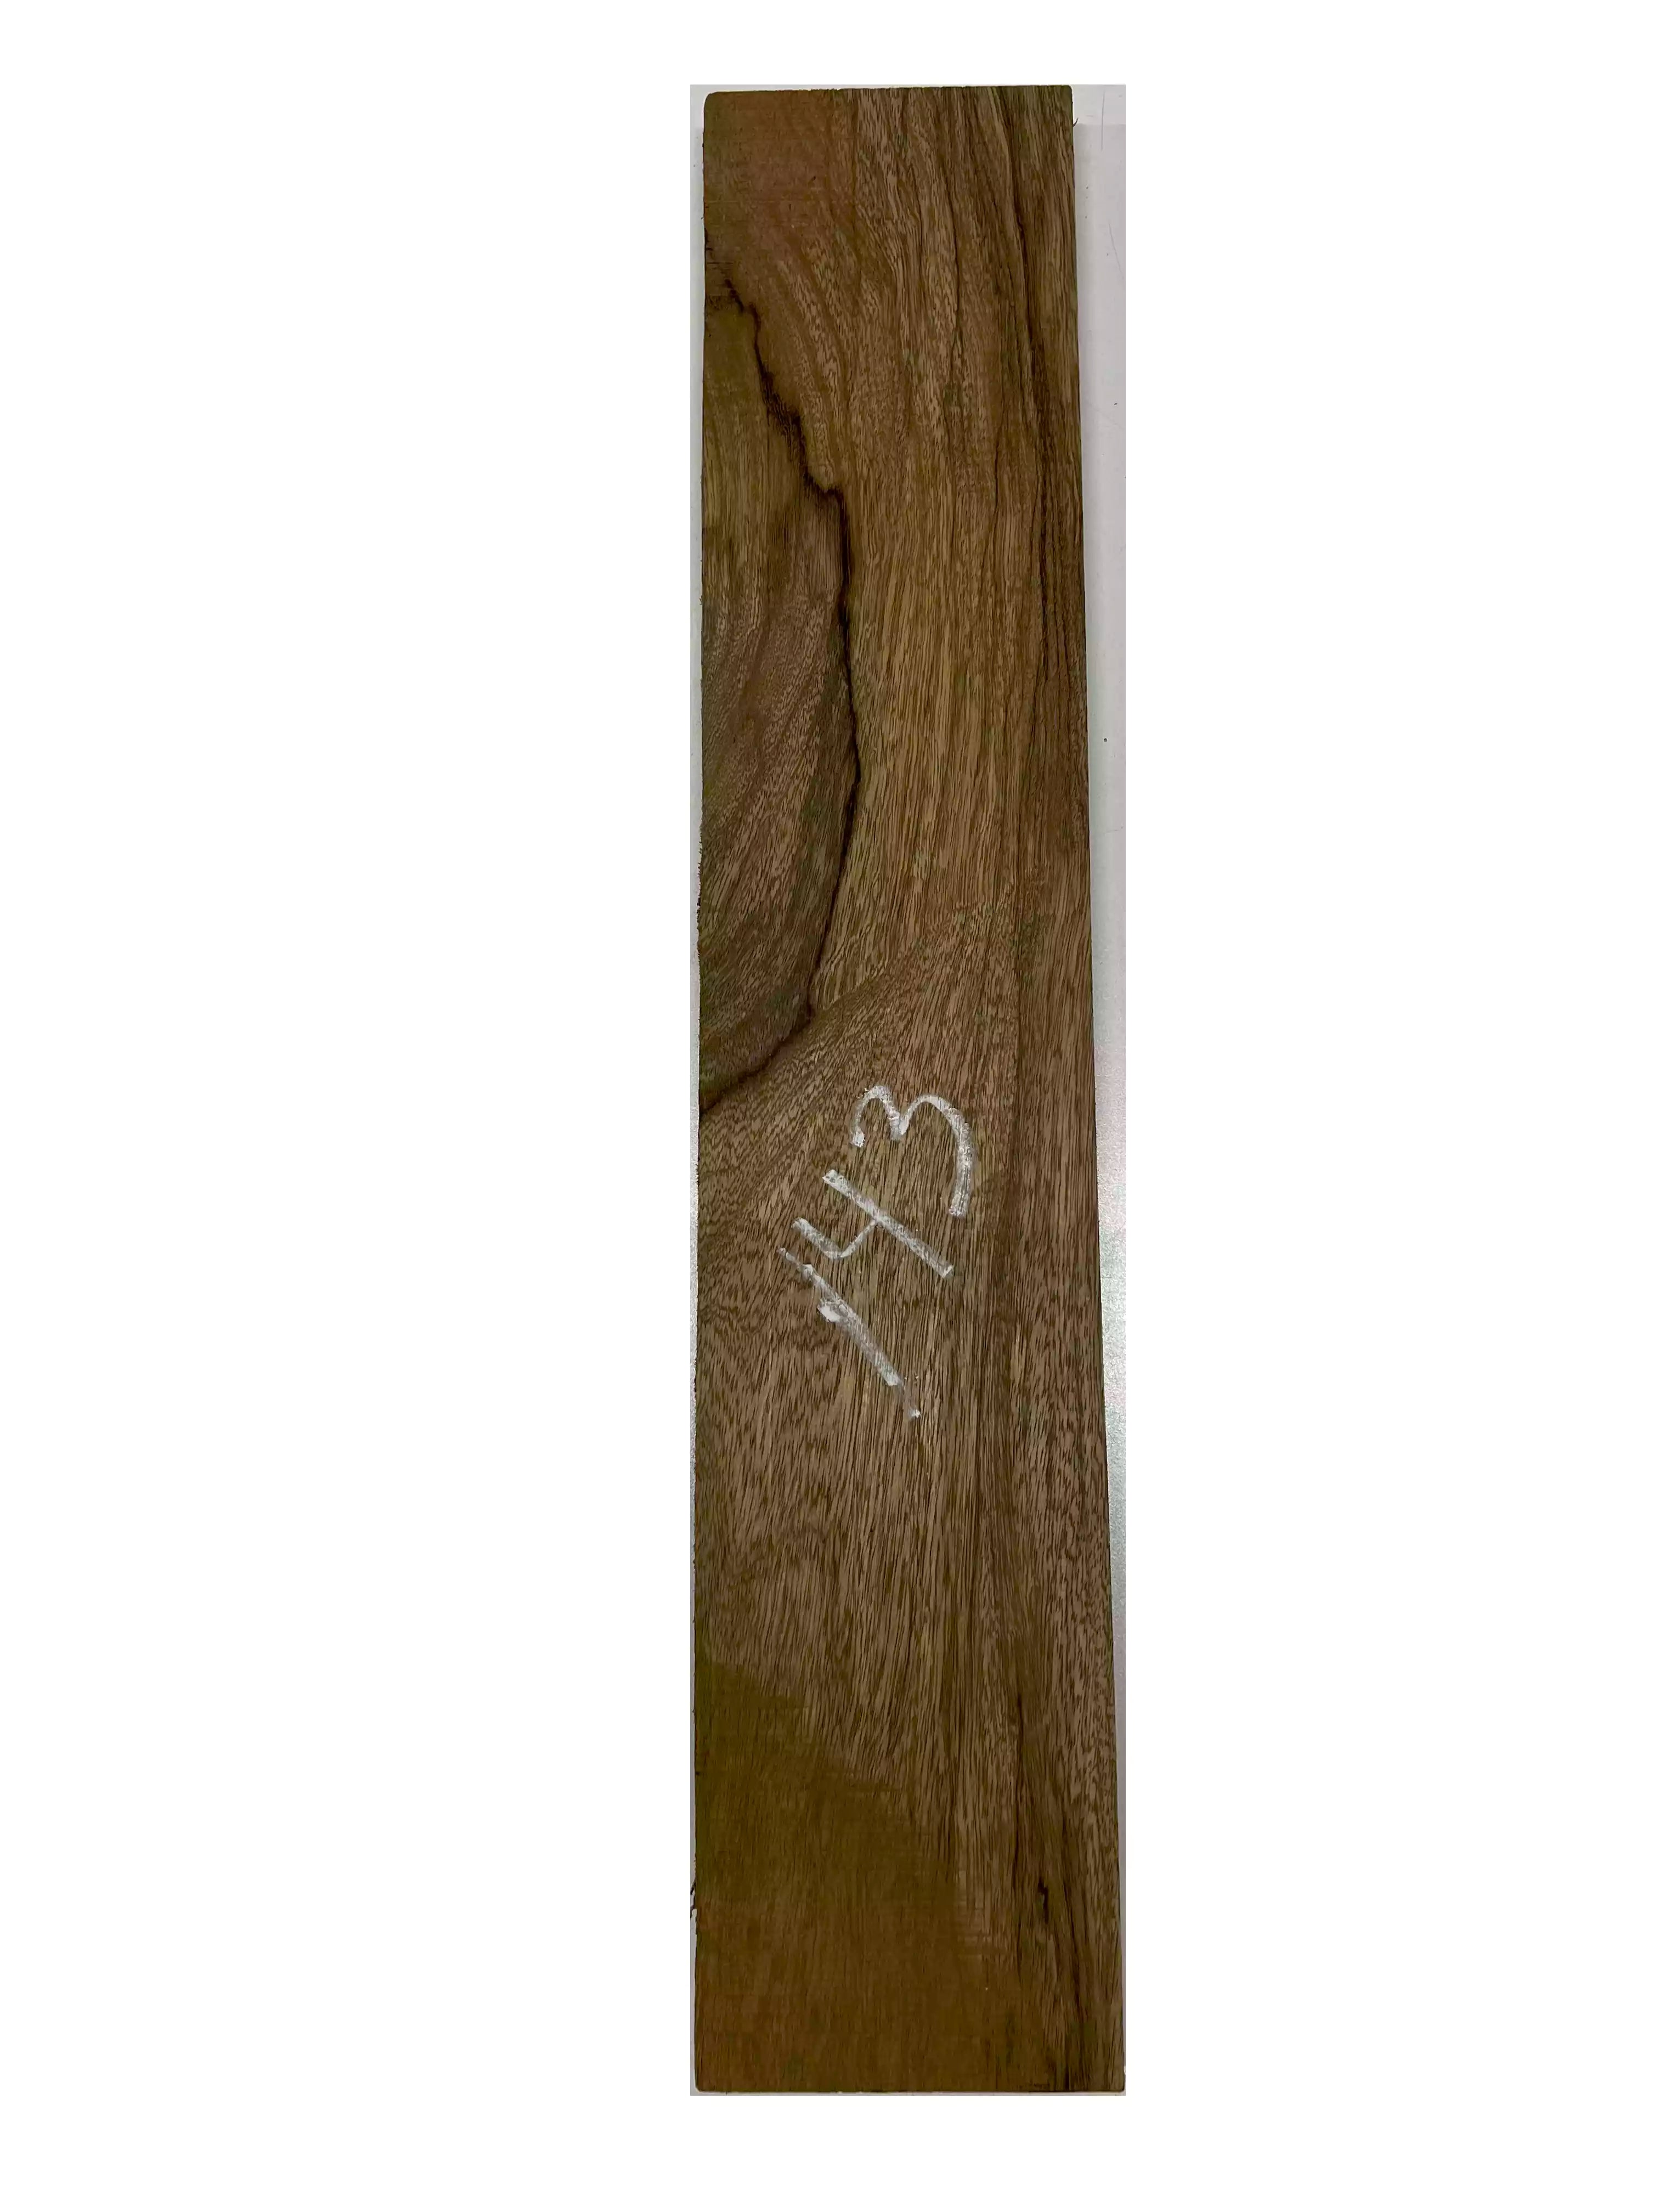 Black Limba Thin Stock Three-Dimensional Lumber Board Wood Blank 24&quot; x 4-3/4&quot; x 3/4&quot; 